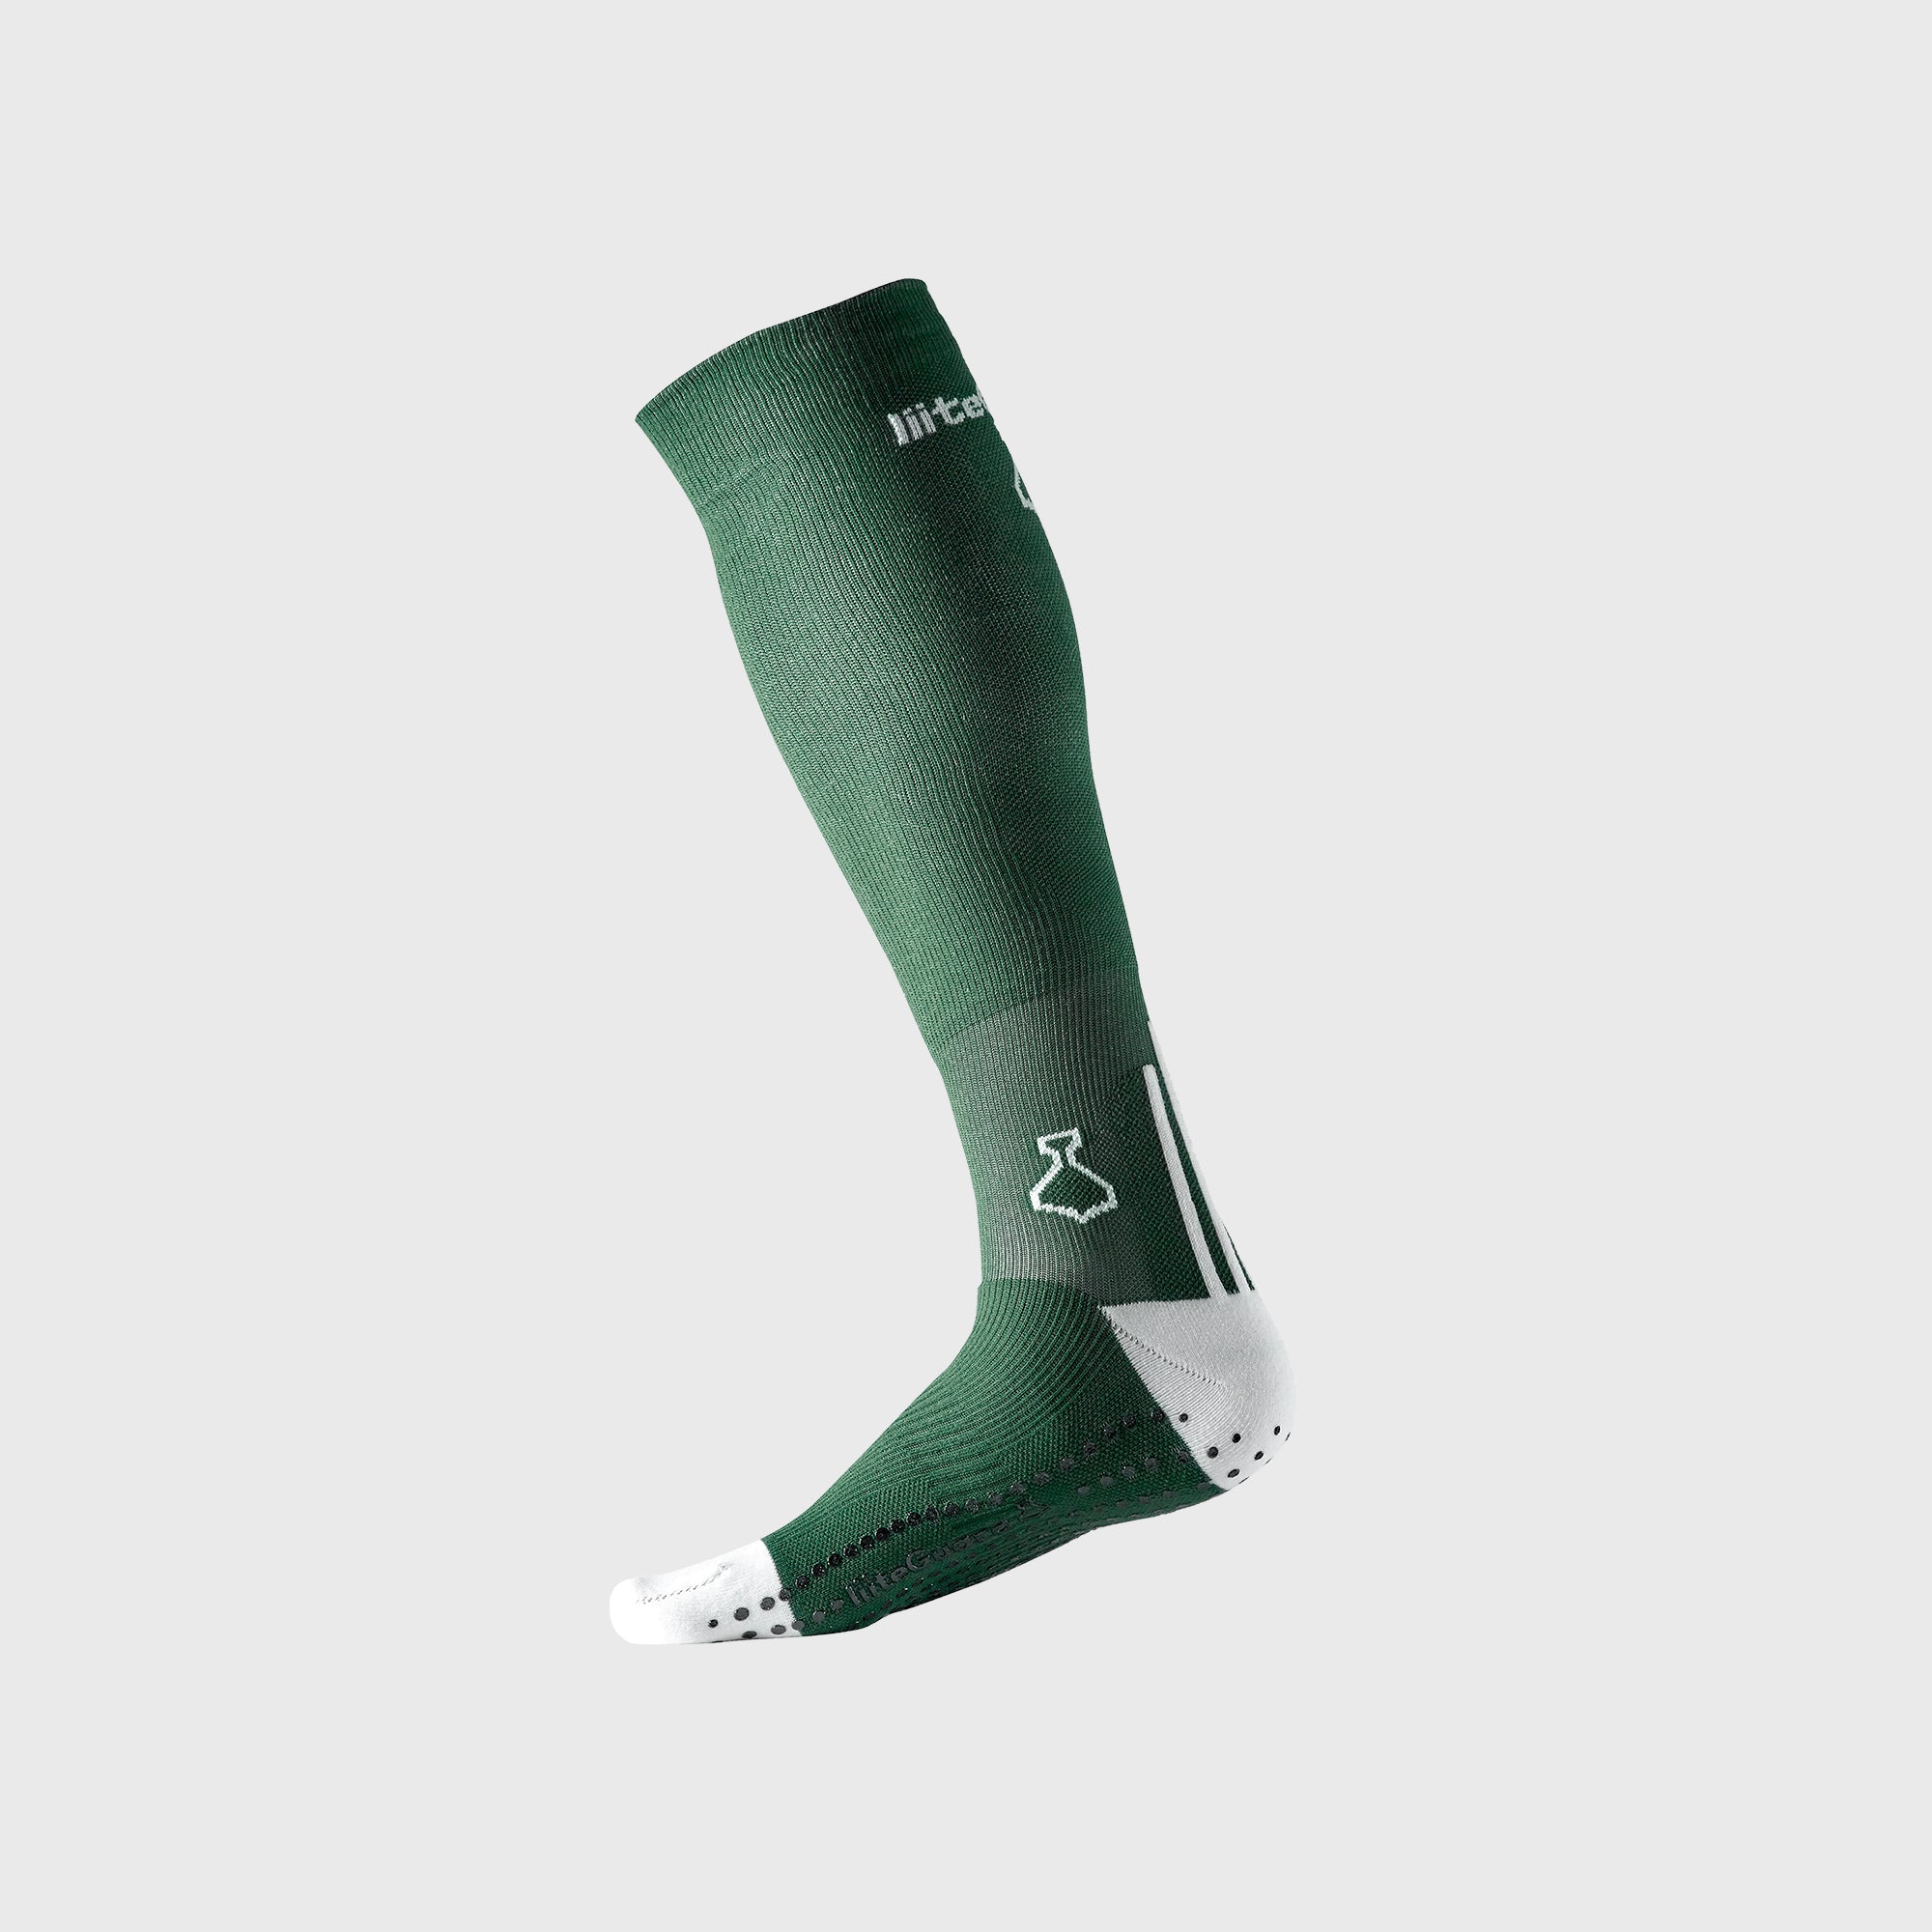 Liiteguard PERFORMANCE SOCK Long socks Dark green